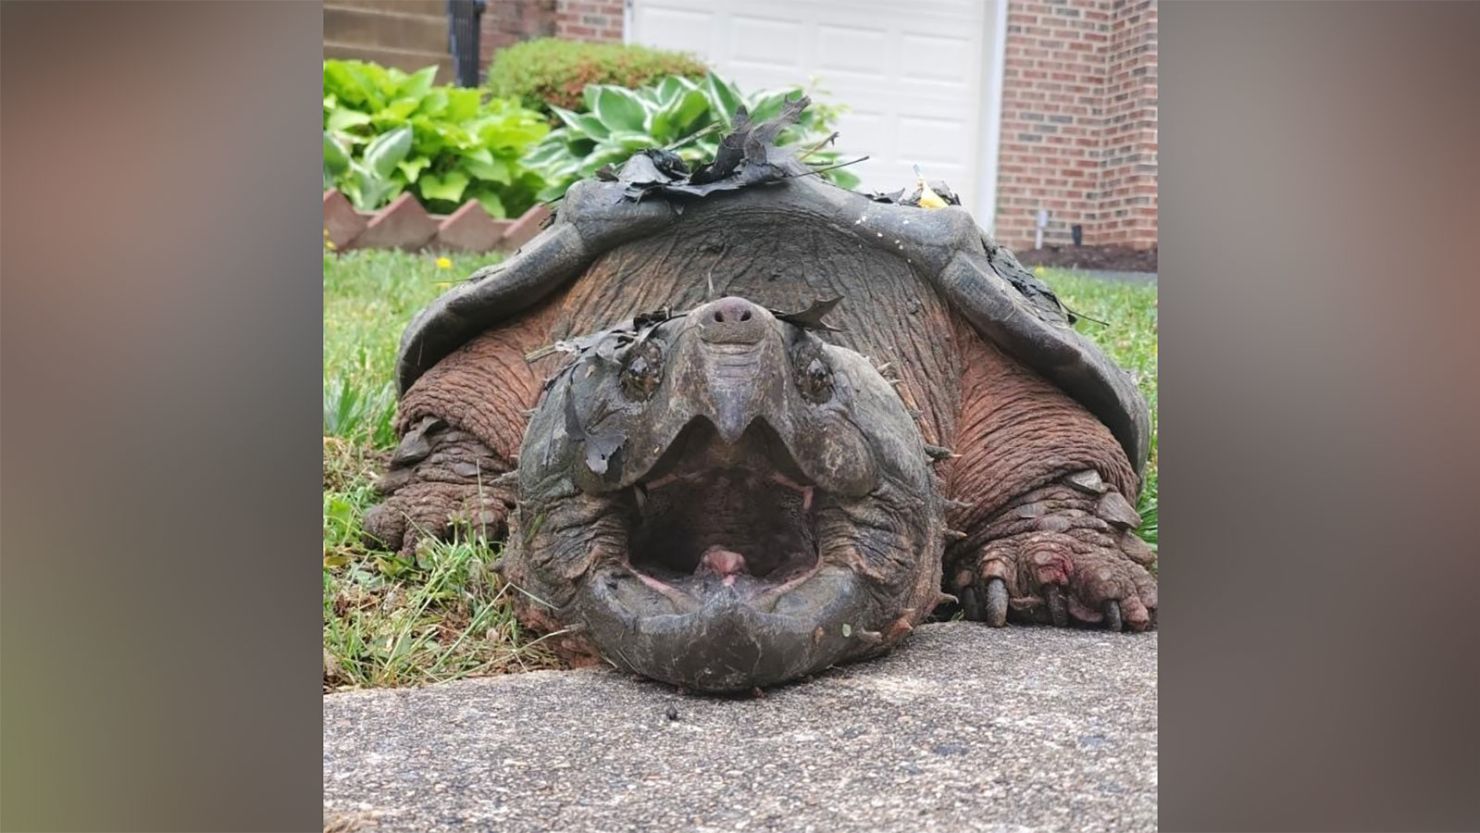 65 pound turtle crosses road